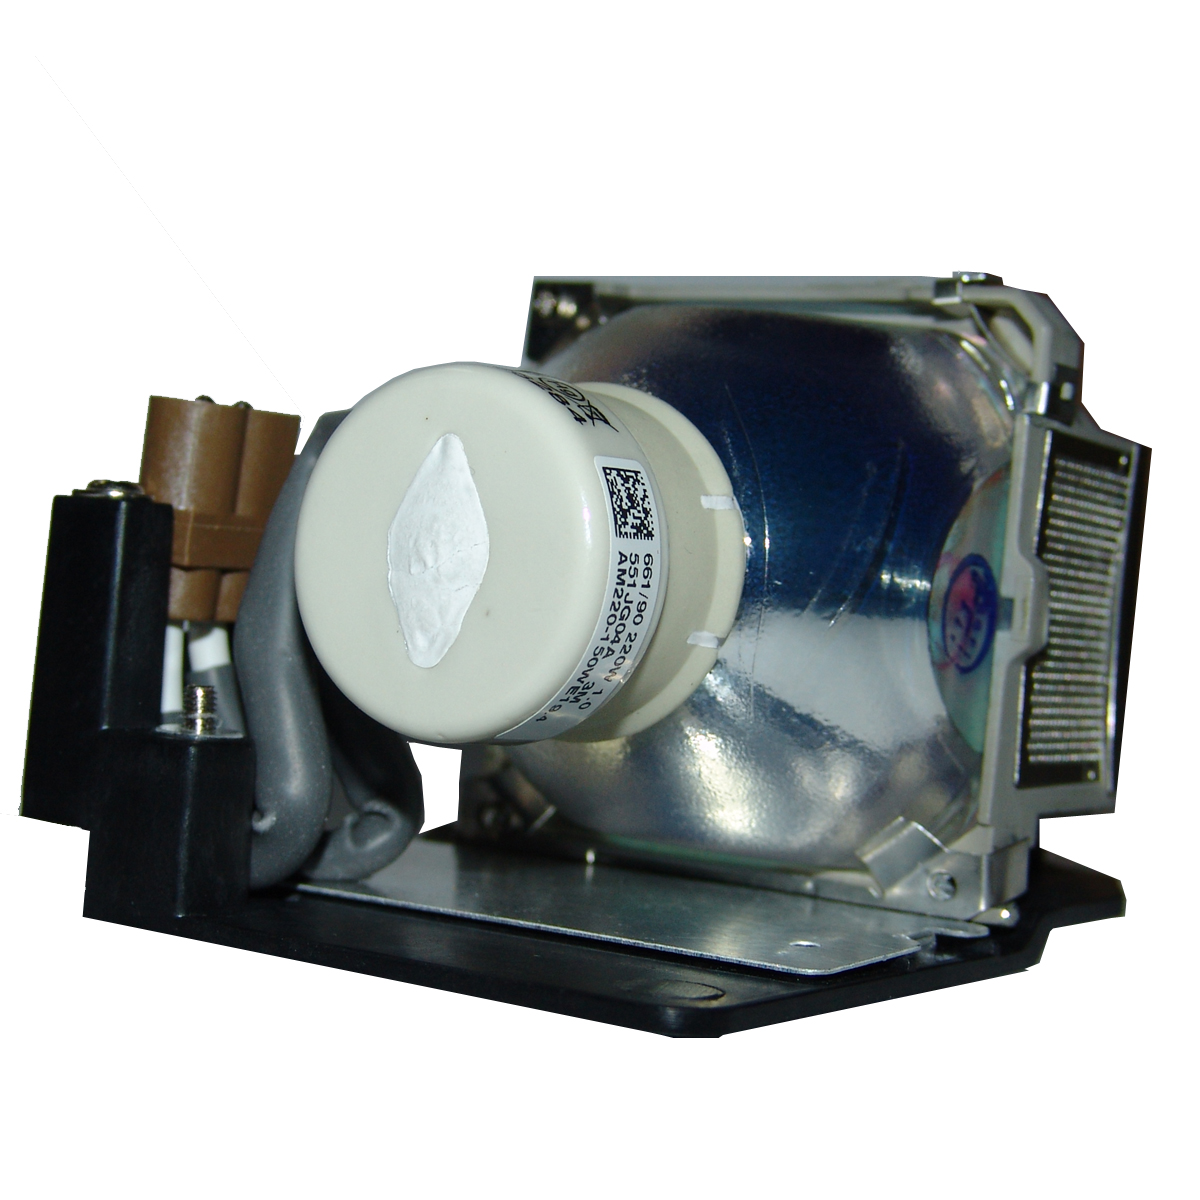 SONY VPL-BW7 VPL-ES7 Lamp with OEM Philips UHP bulb inside LMP-E191 VPL-EX70